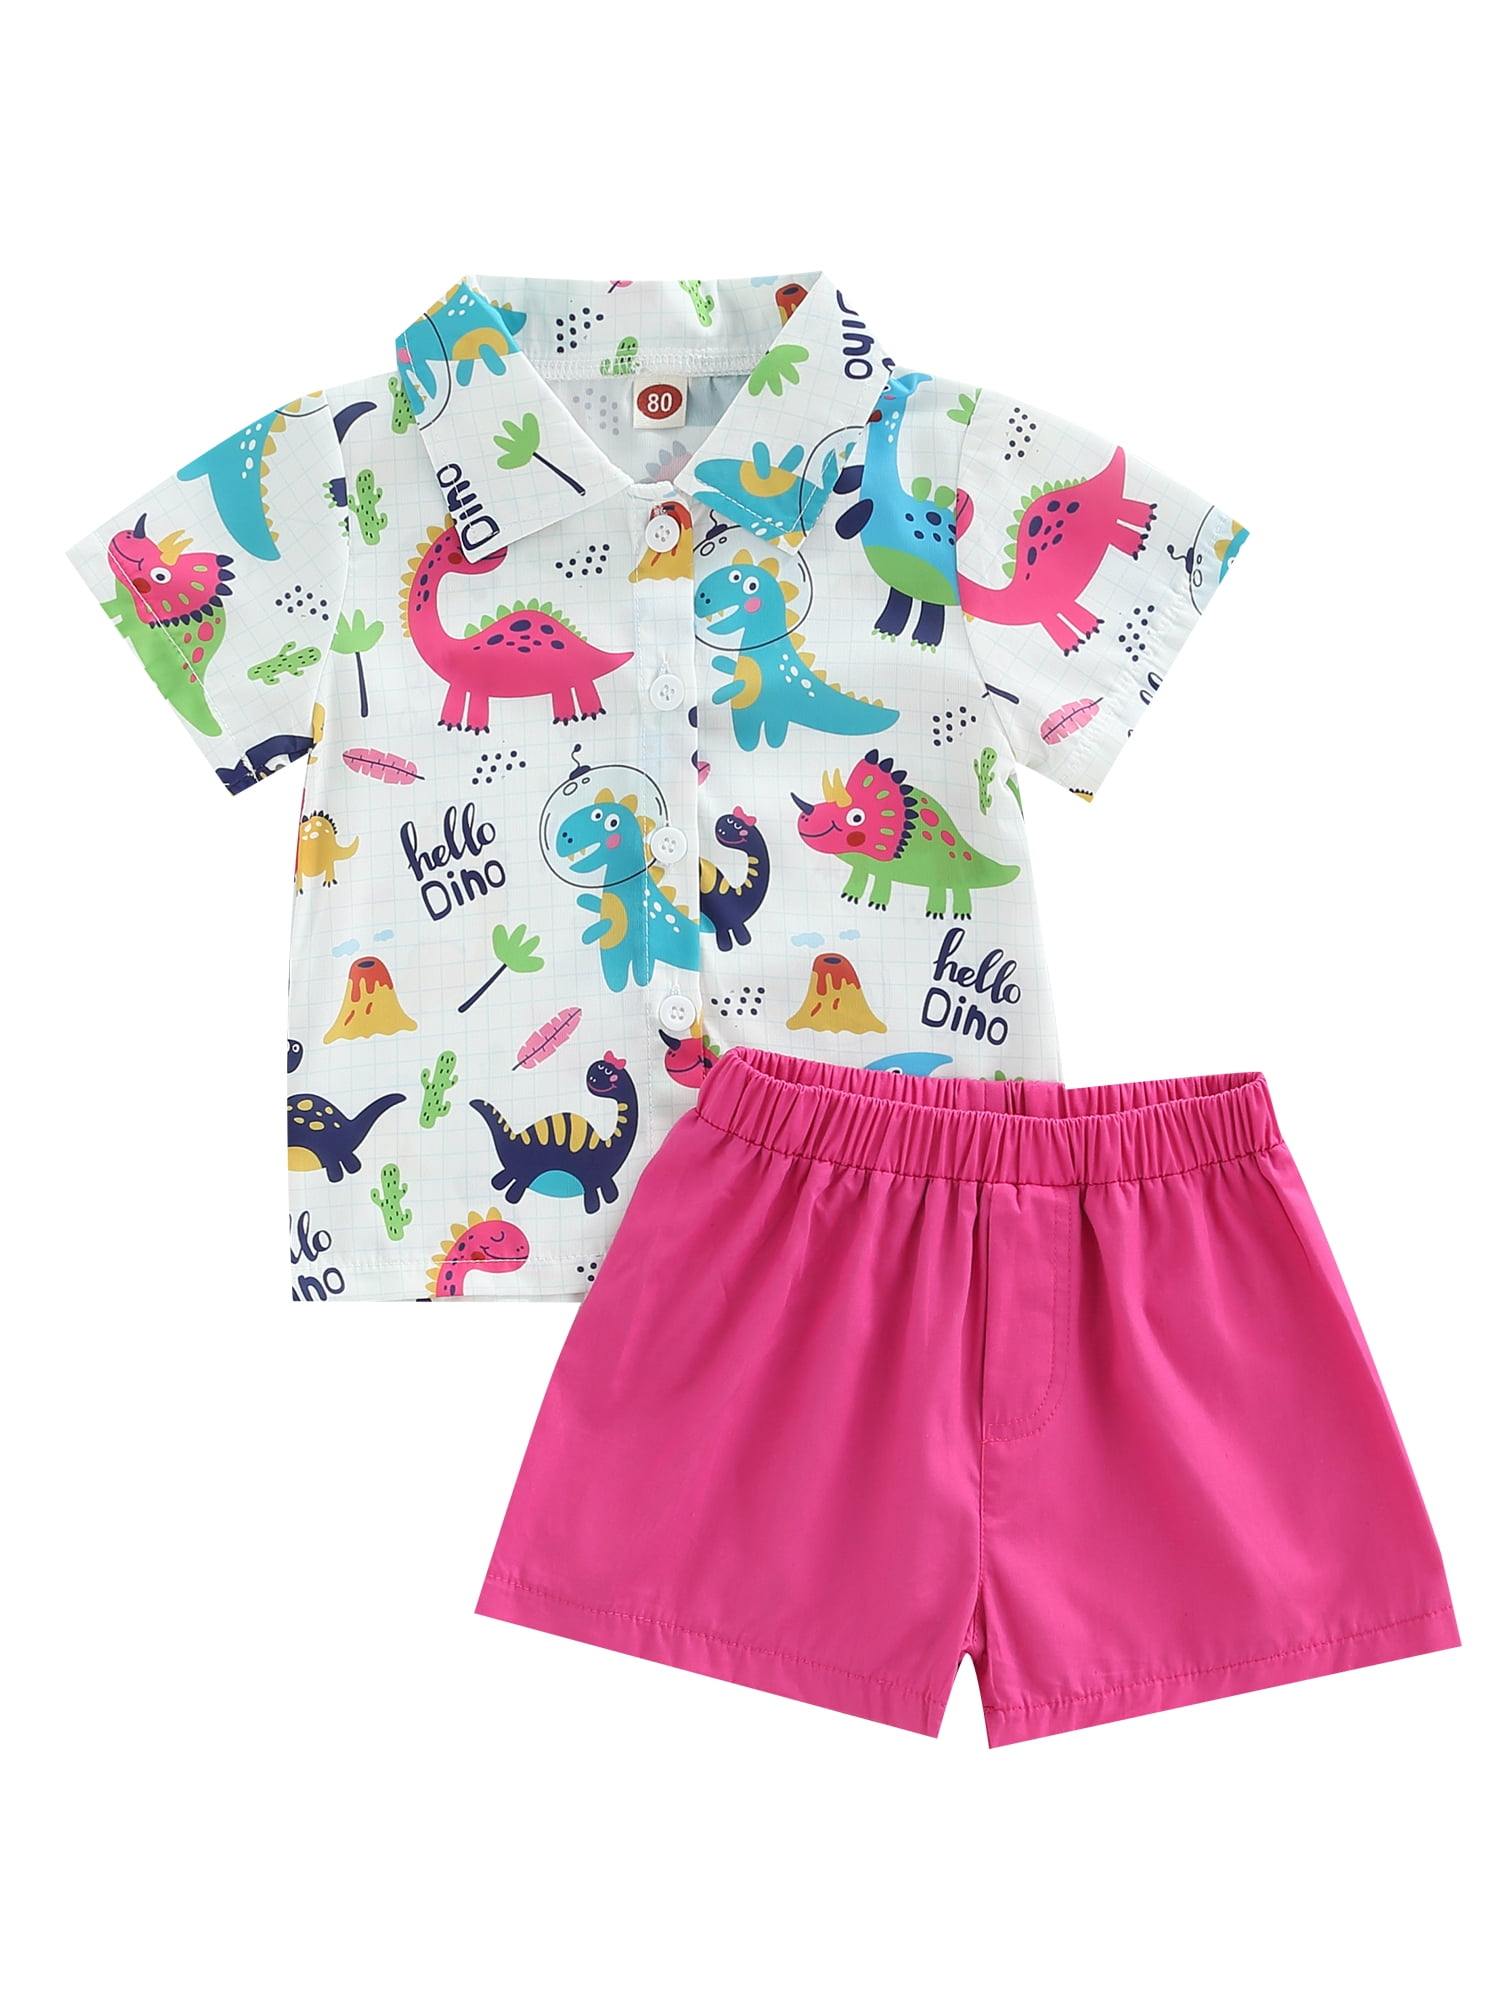 Muasaaluxi Toddler Kid Baby Girls Cartoon Short Sleeve T-Shirt Elephant Patterns Shorts Pants Summer Outfit 18M-5Y 